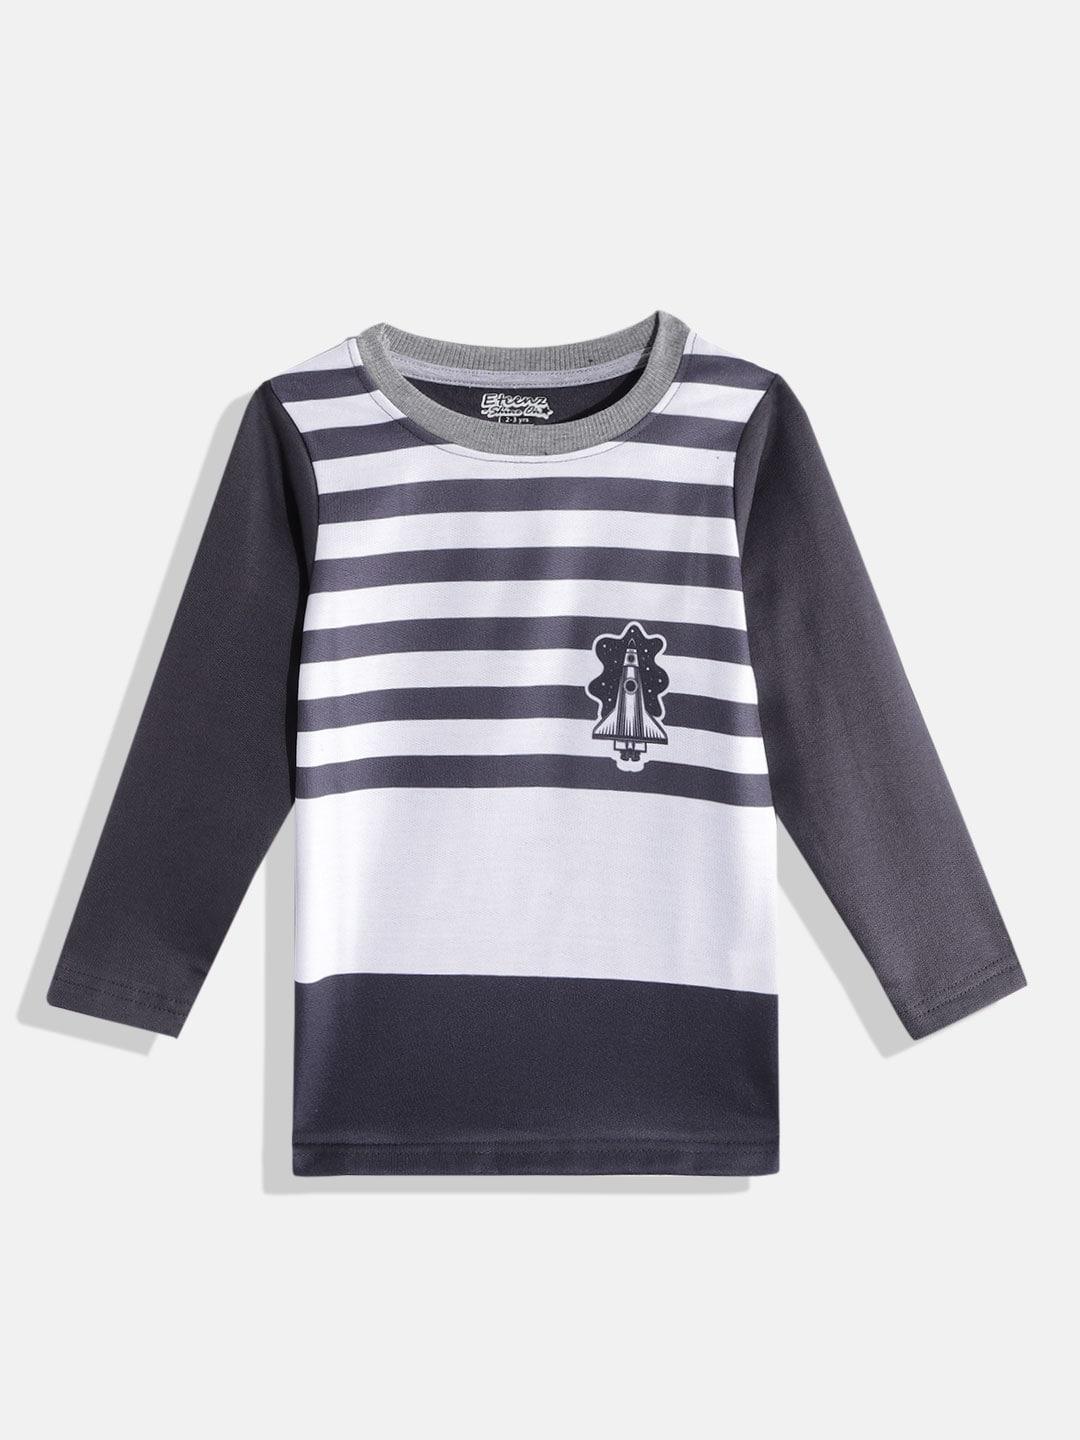 Eteenz Boys Charcoal Grey & White Striped Pure Cotton Sweatshirt